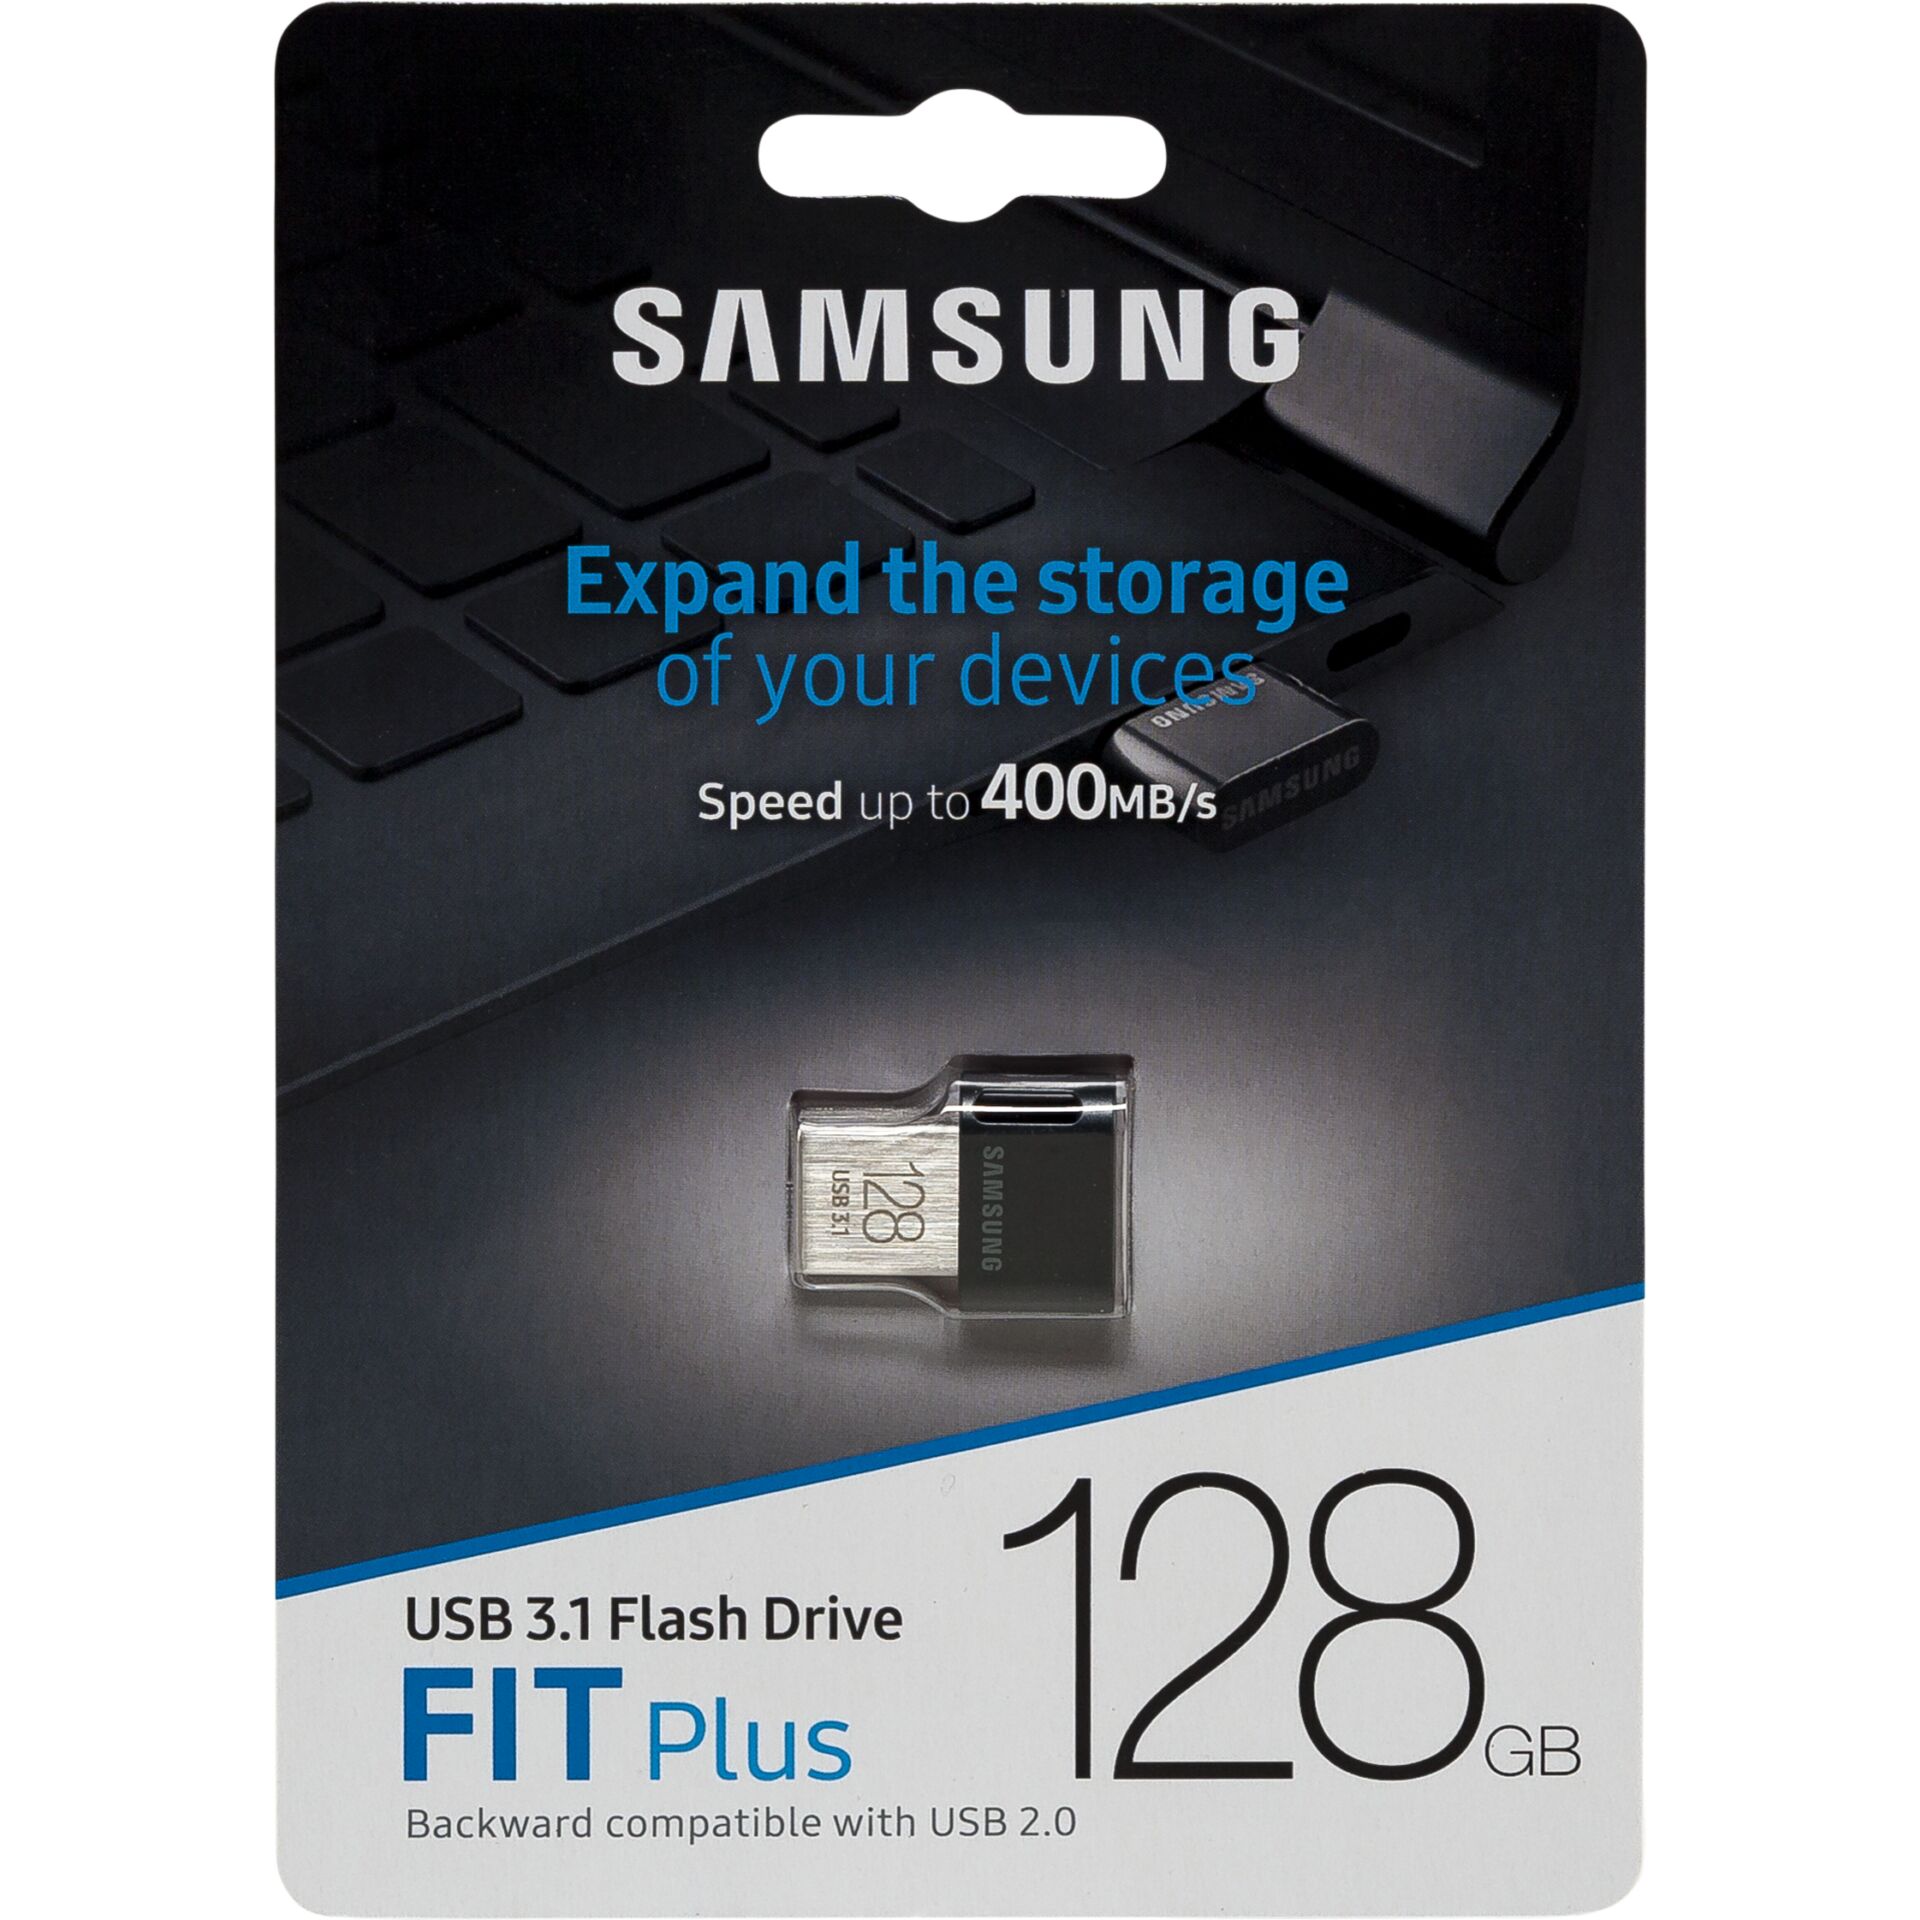 128 GB Samsung FIT Plus 2020 USB-Stick, USB-A 3.0, lesen: 400MB/s, schreiben: 60MB/s